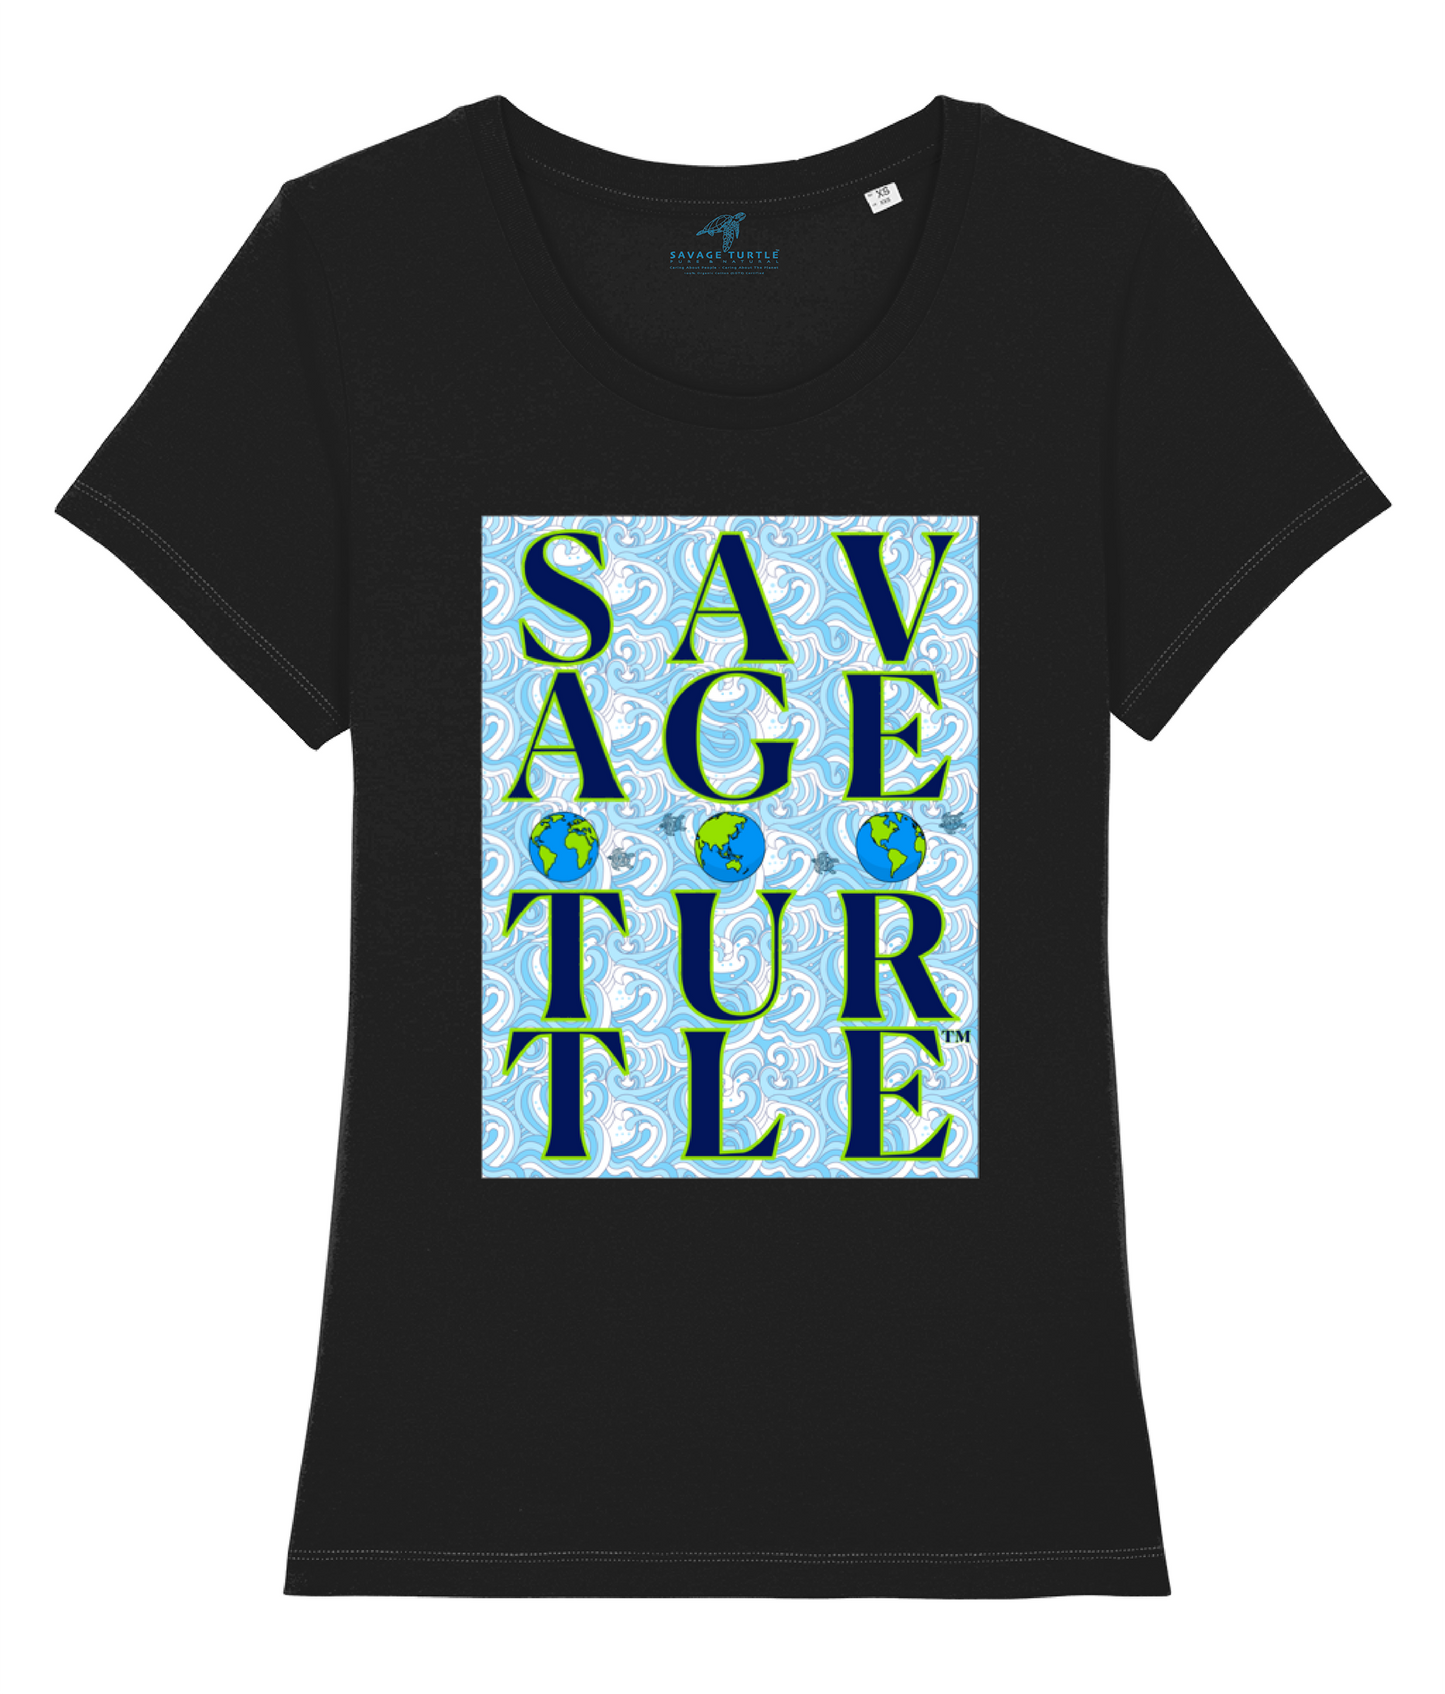 T-shirt Black Ladies Savage Turtle WAVES